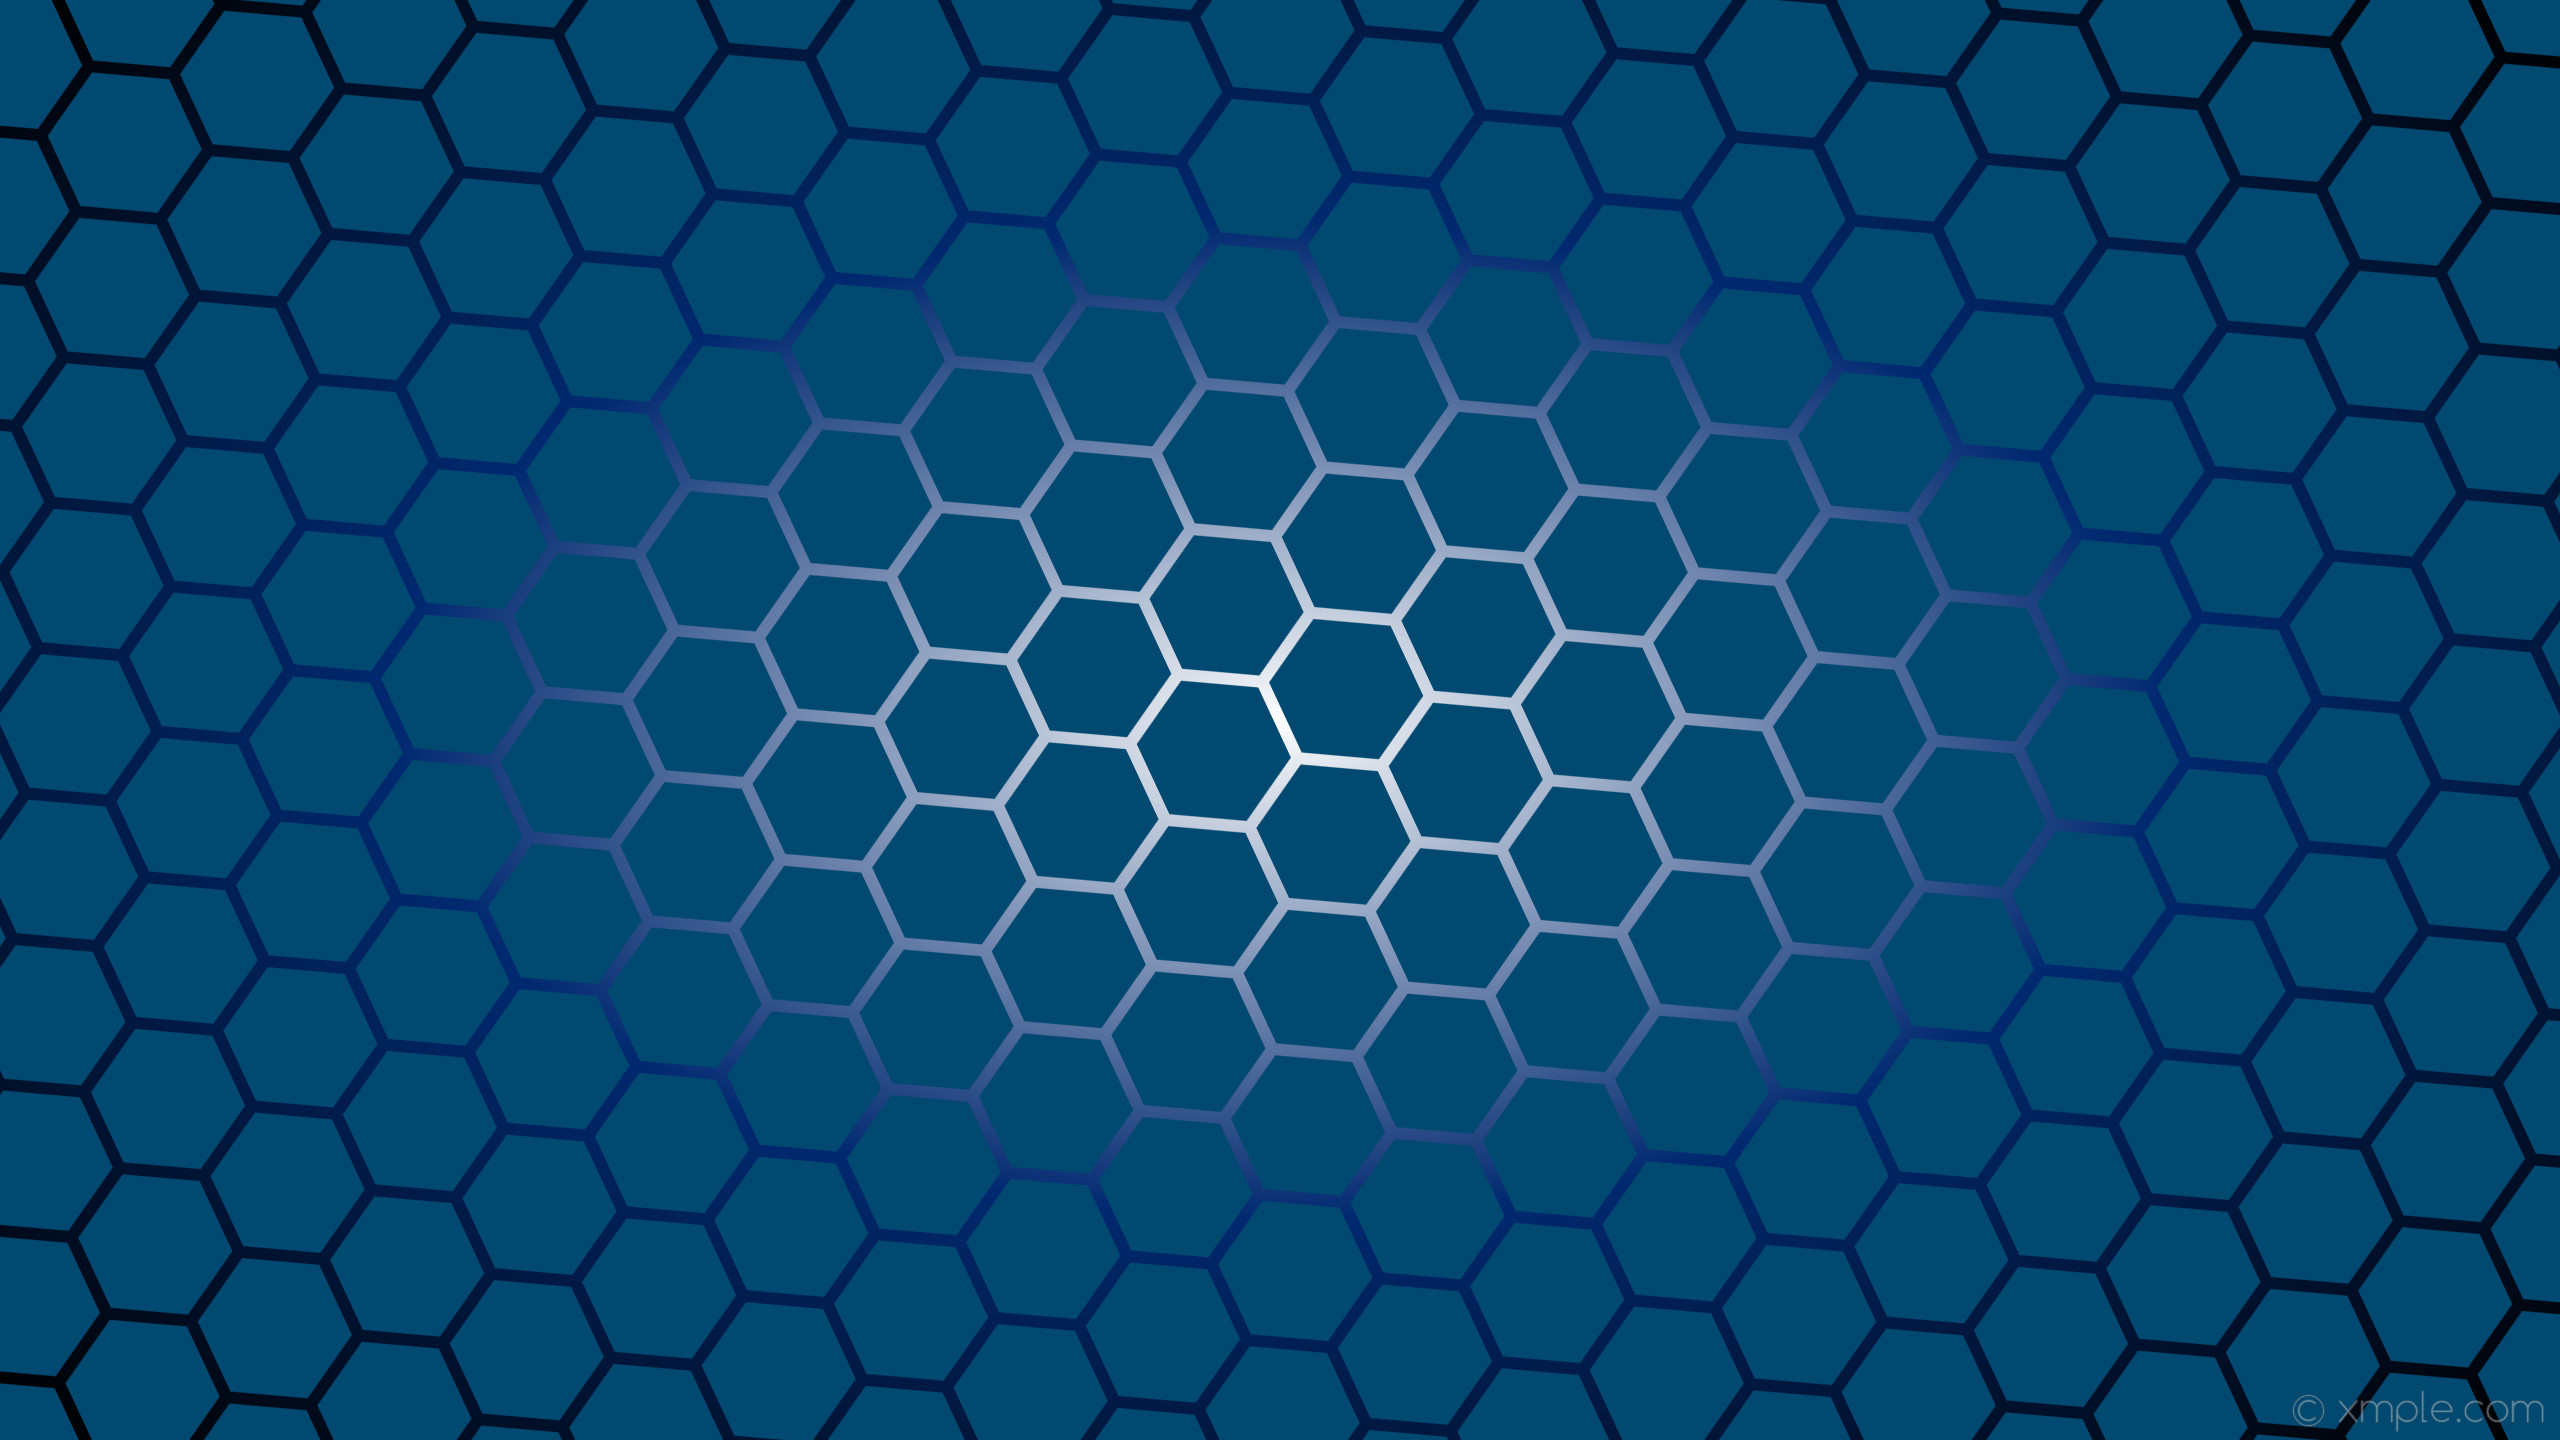 2560x1440 wallpaper gradient azure black hexagon glow white #014970 #ffffff #012870  diagonal 25Â°